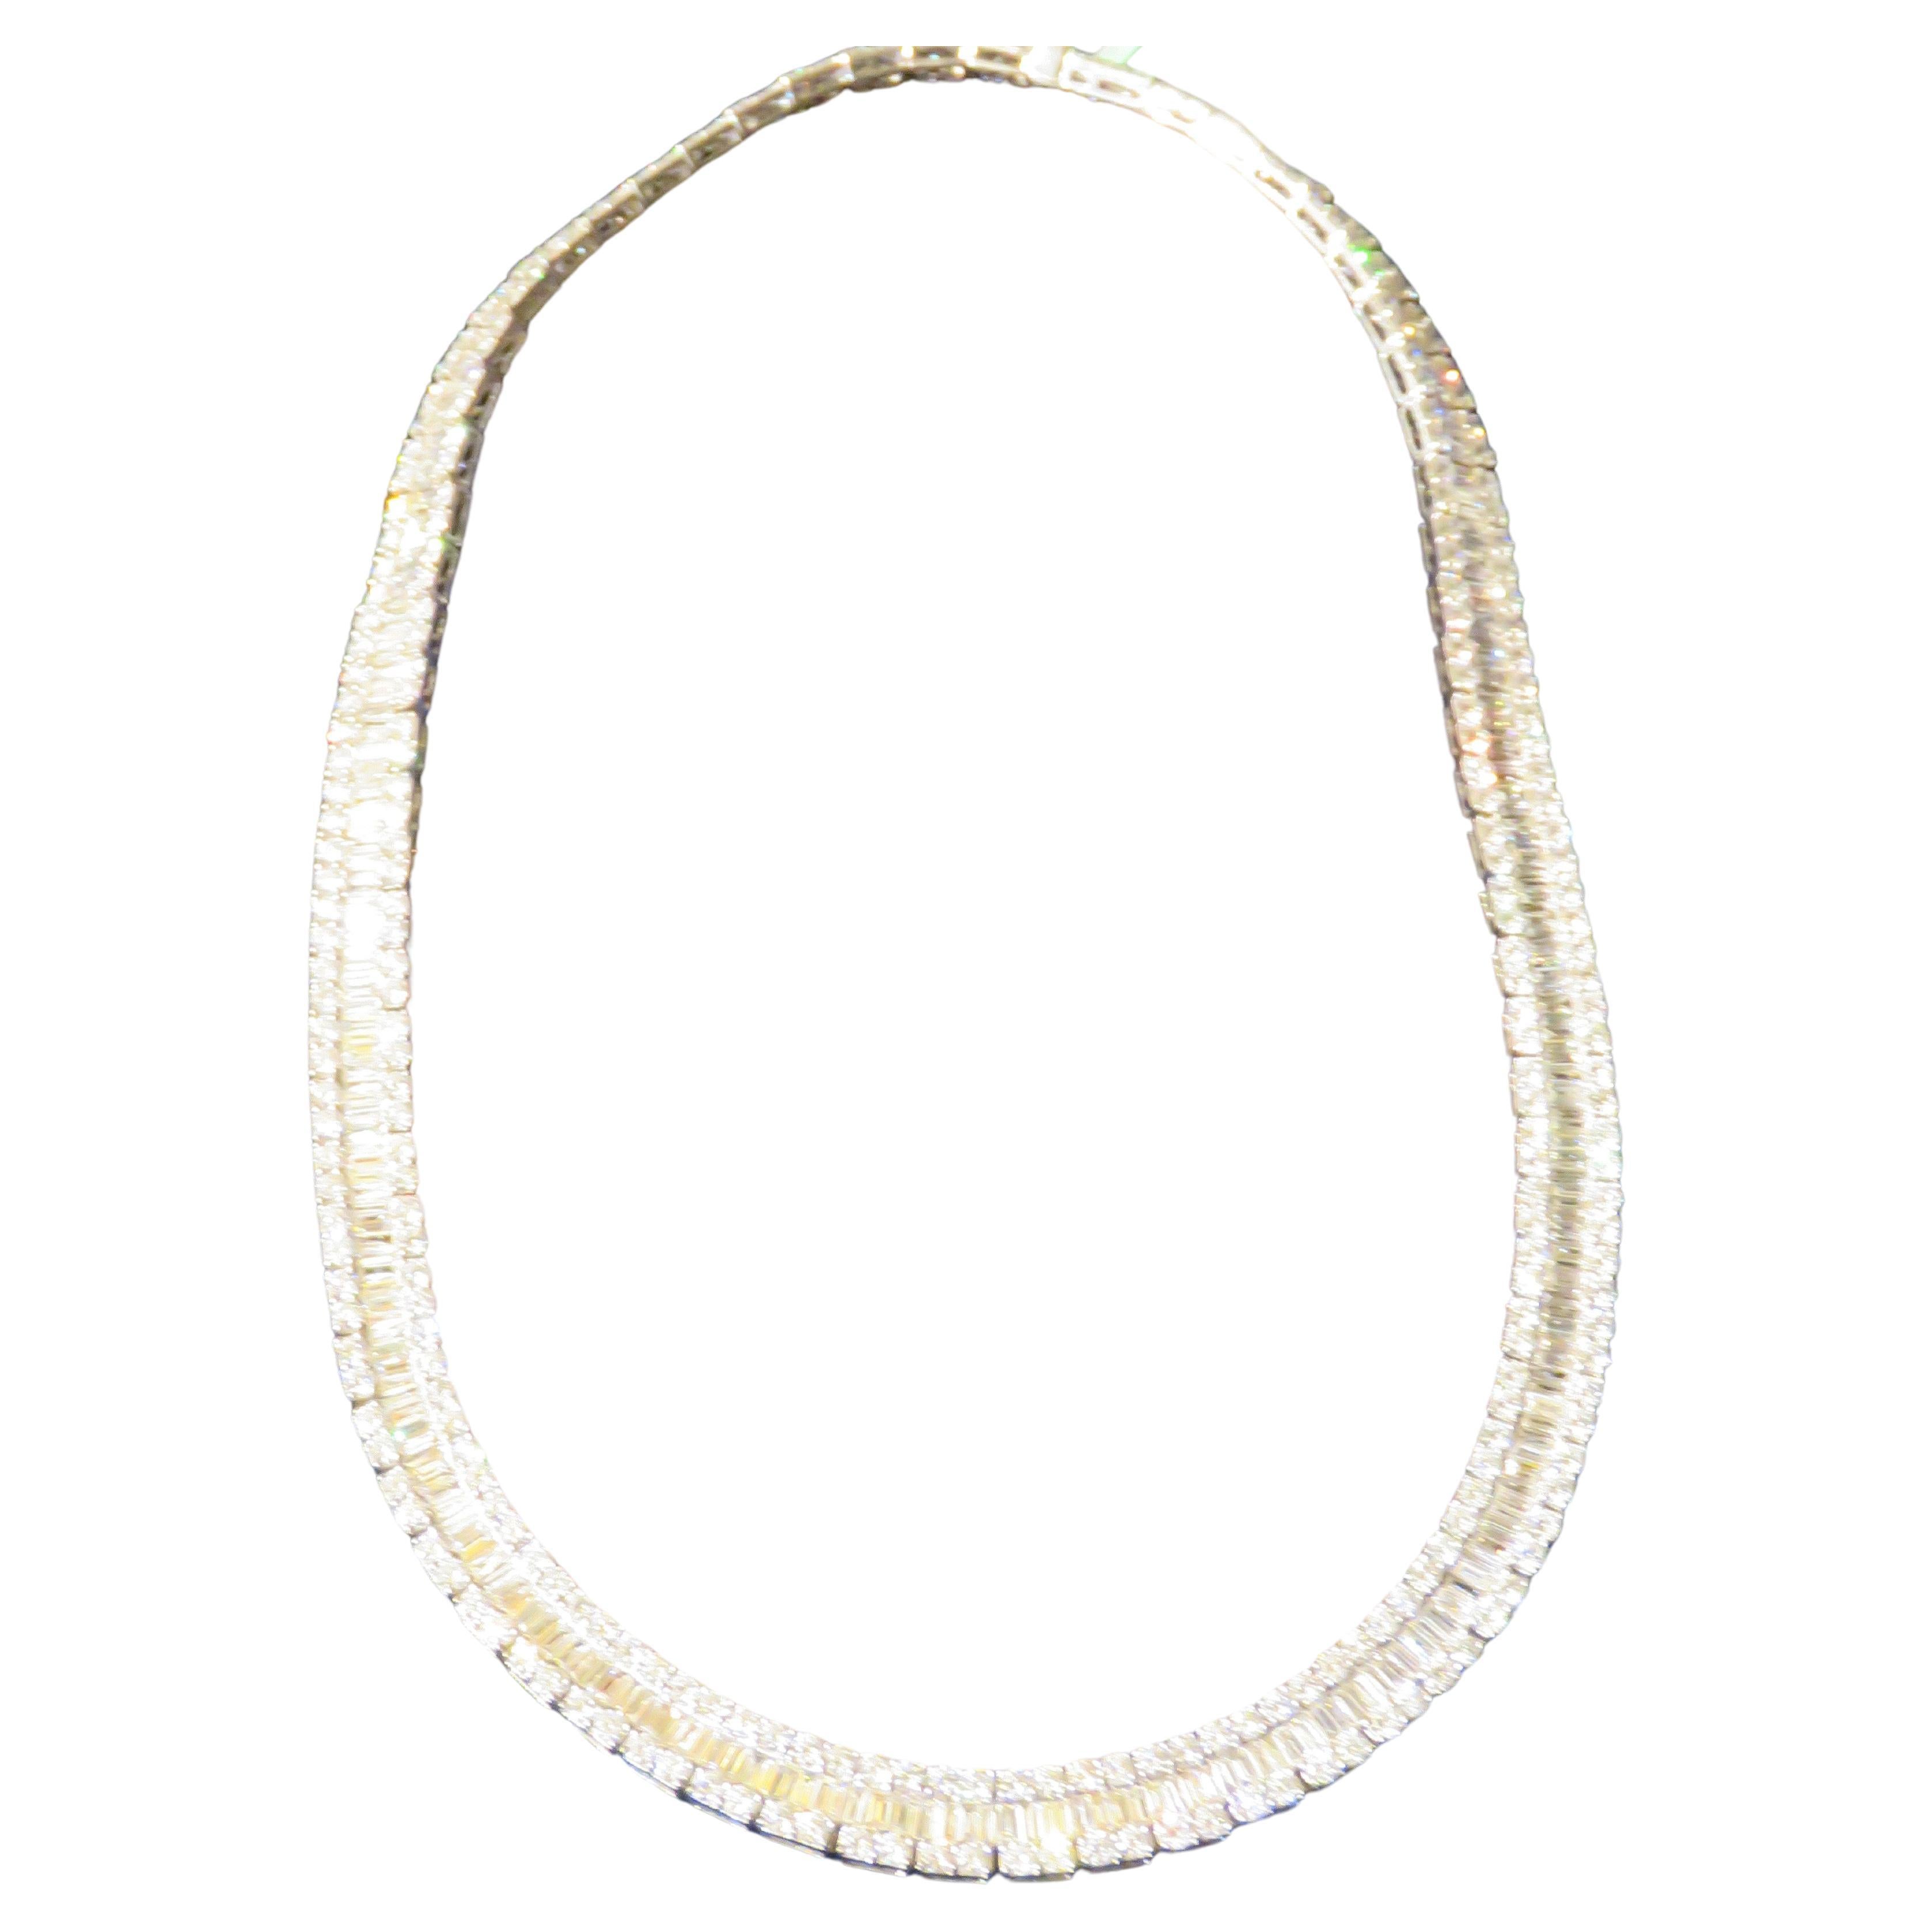 NWT $205, 735 18KT Gold Rare Fancy Glittering 32.50CT Baguette Diamond Necklace